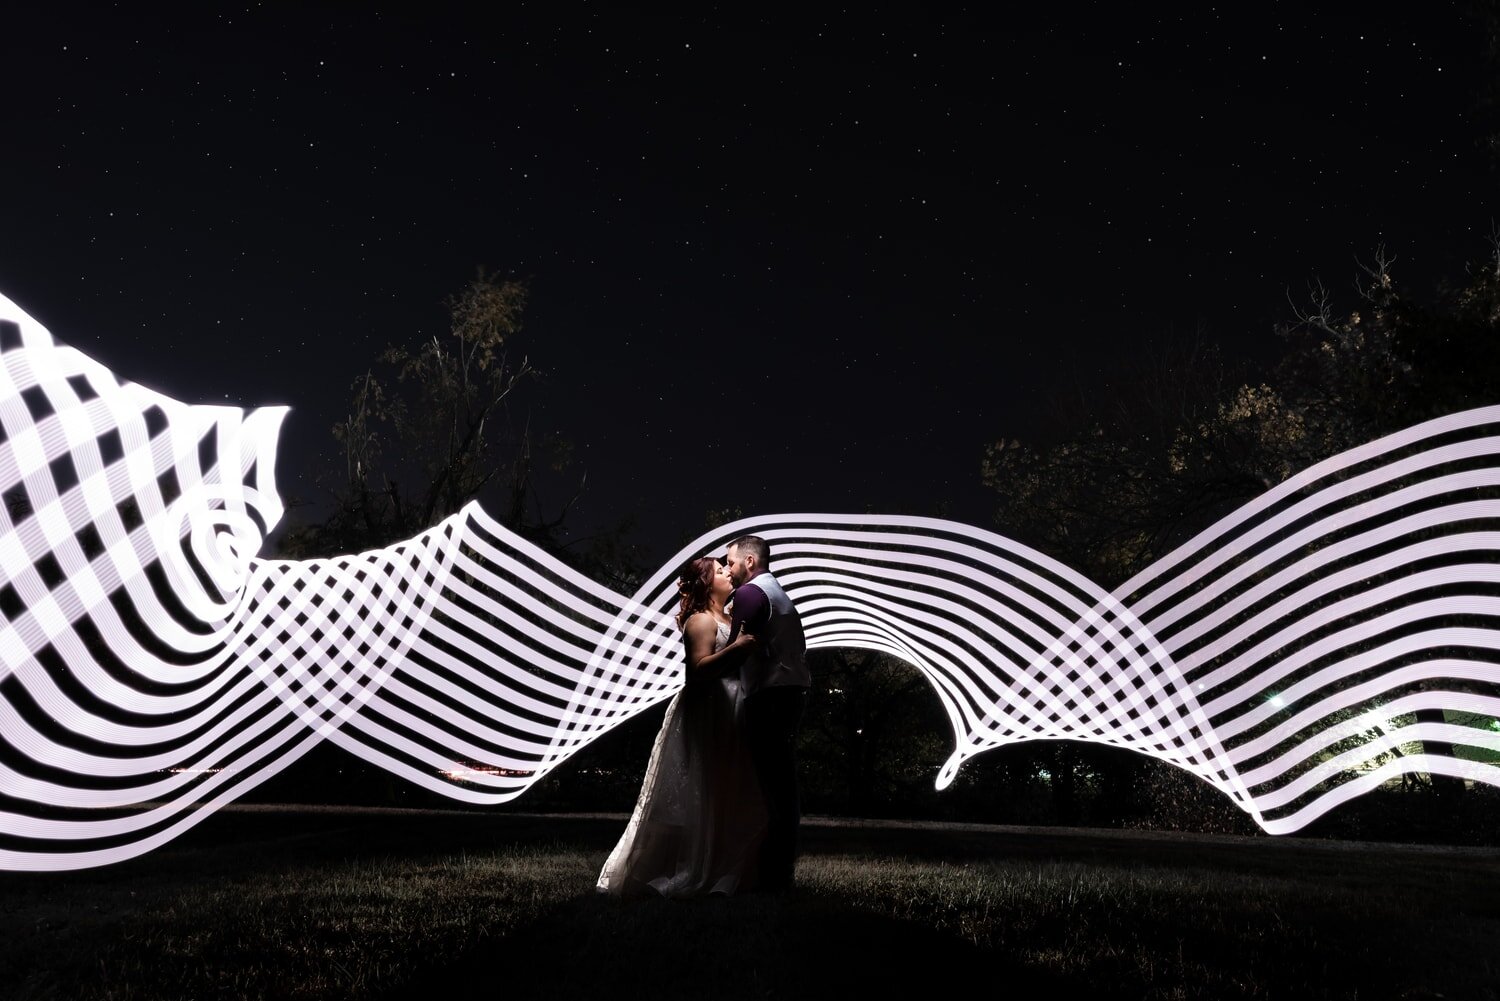 wedding-photographer-photography-okc-edmond-oklahoma-city-beautiful-bride-groom-bridesmaids-groomsmen-bridal-party-portrait-night-sky-light-paint-stars-lines-chadandbriephotography.jpg